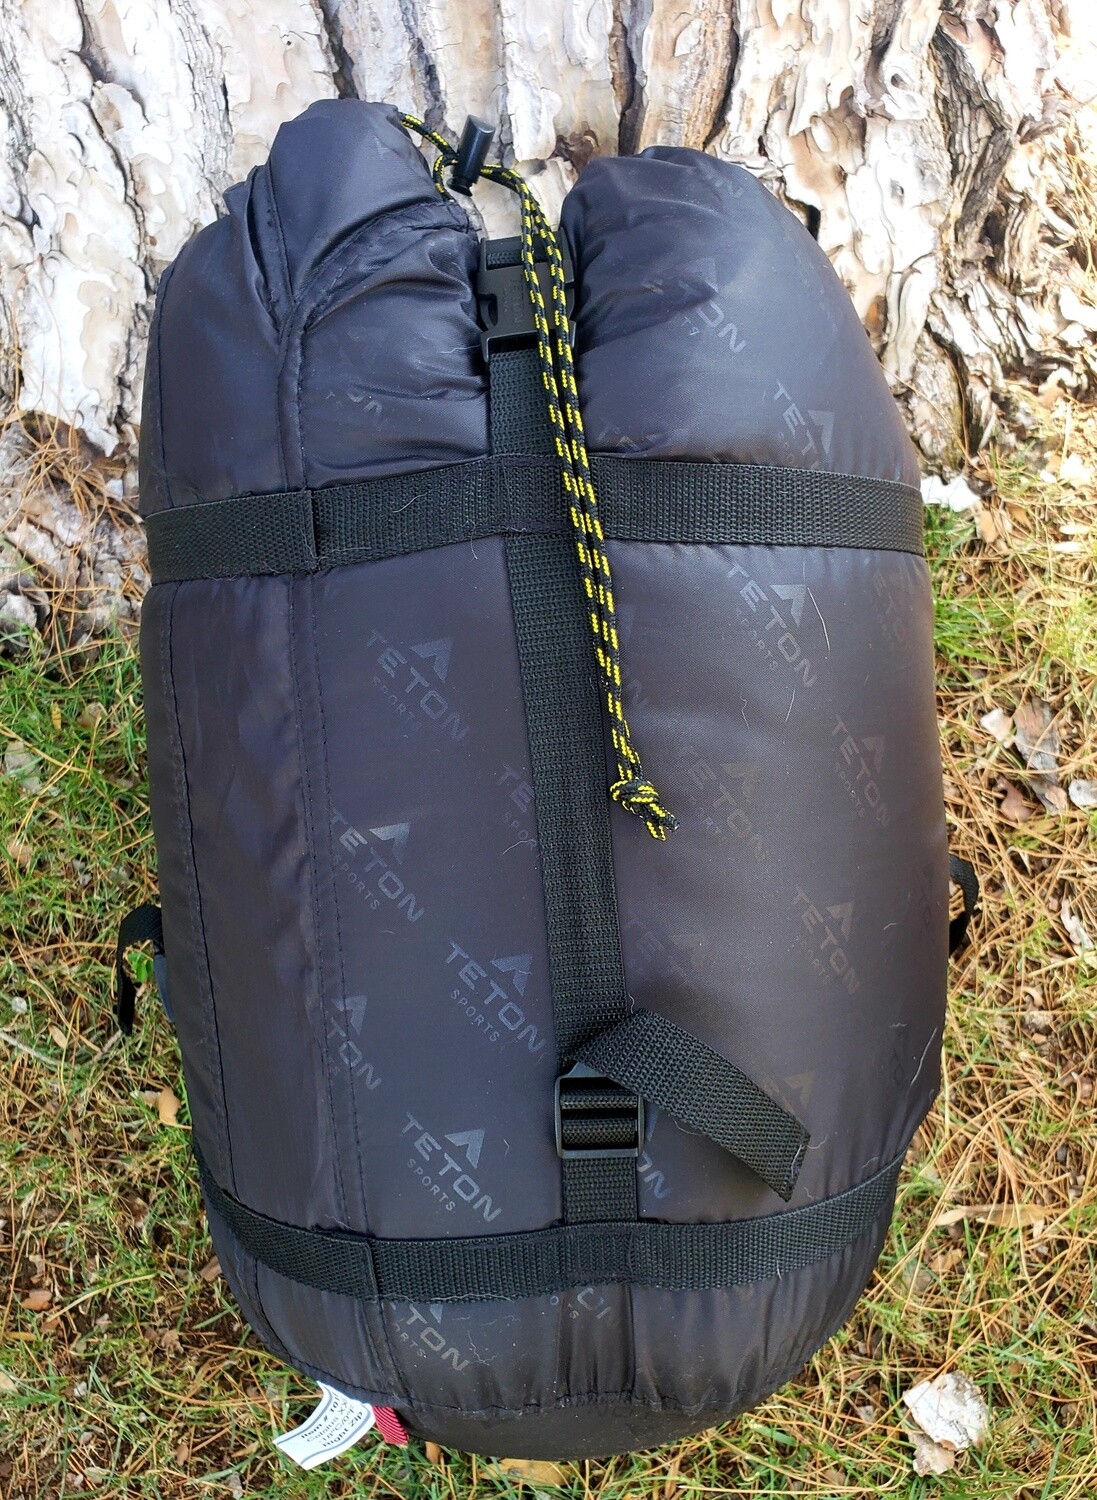 Teton 0° XXL sleeping bag